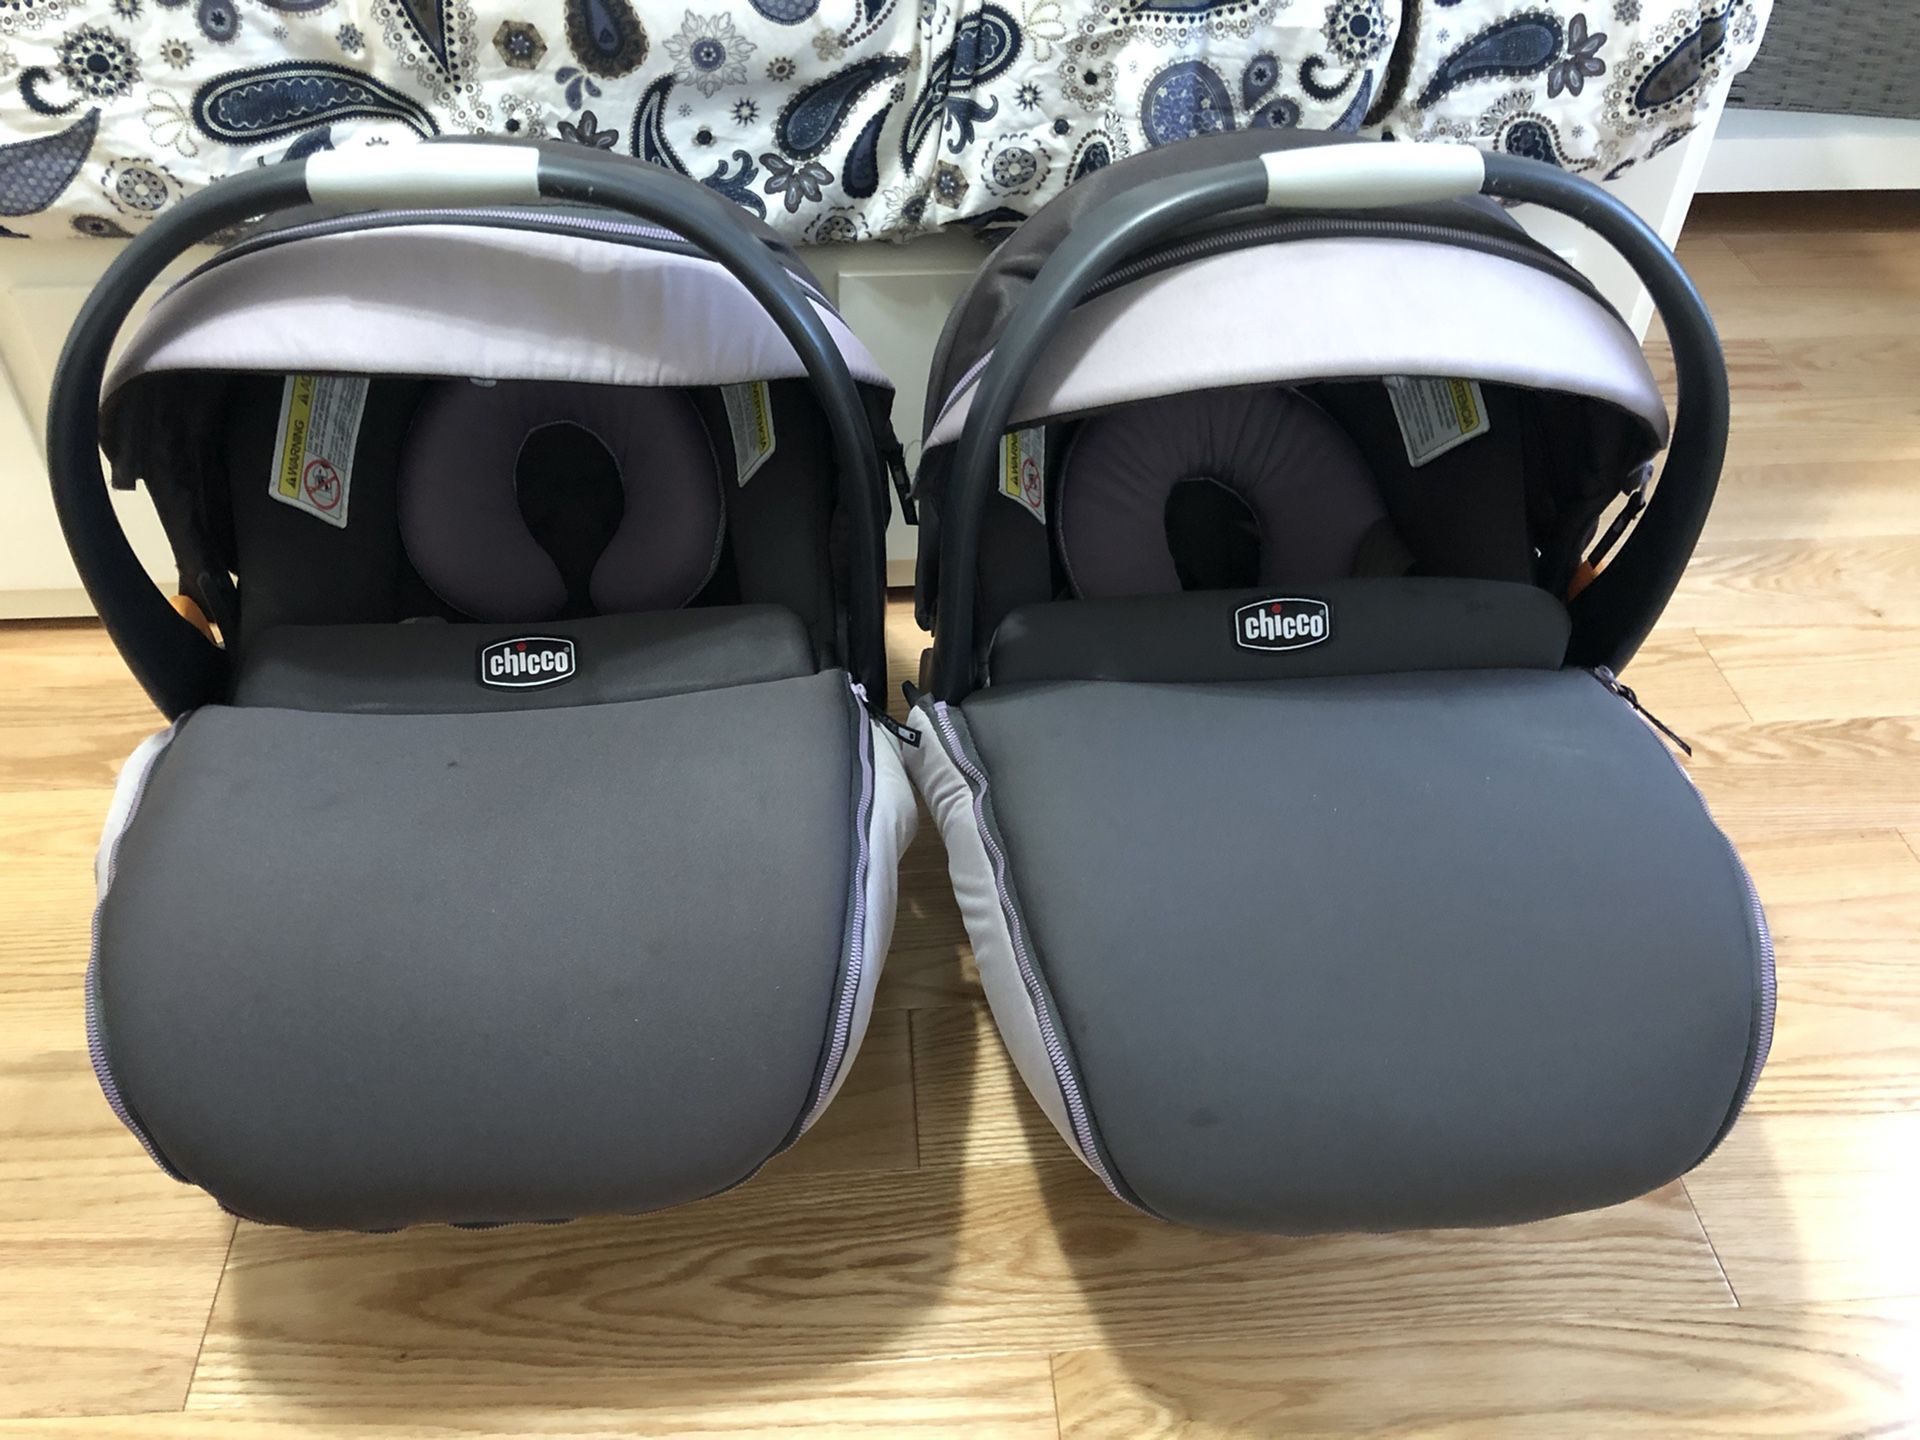 Chicco Infant car seats set